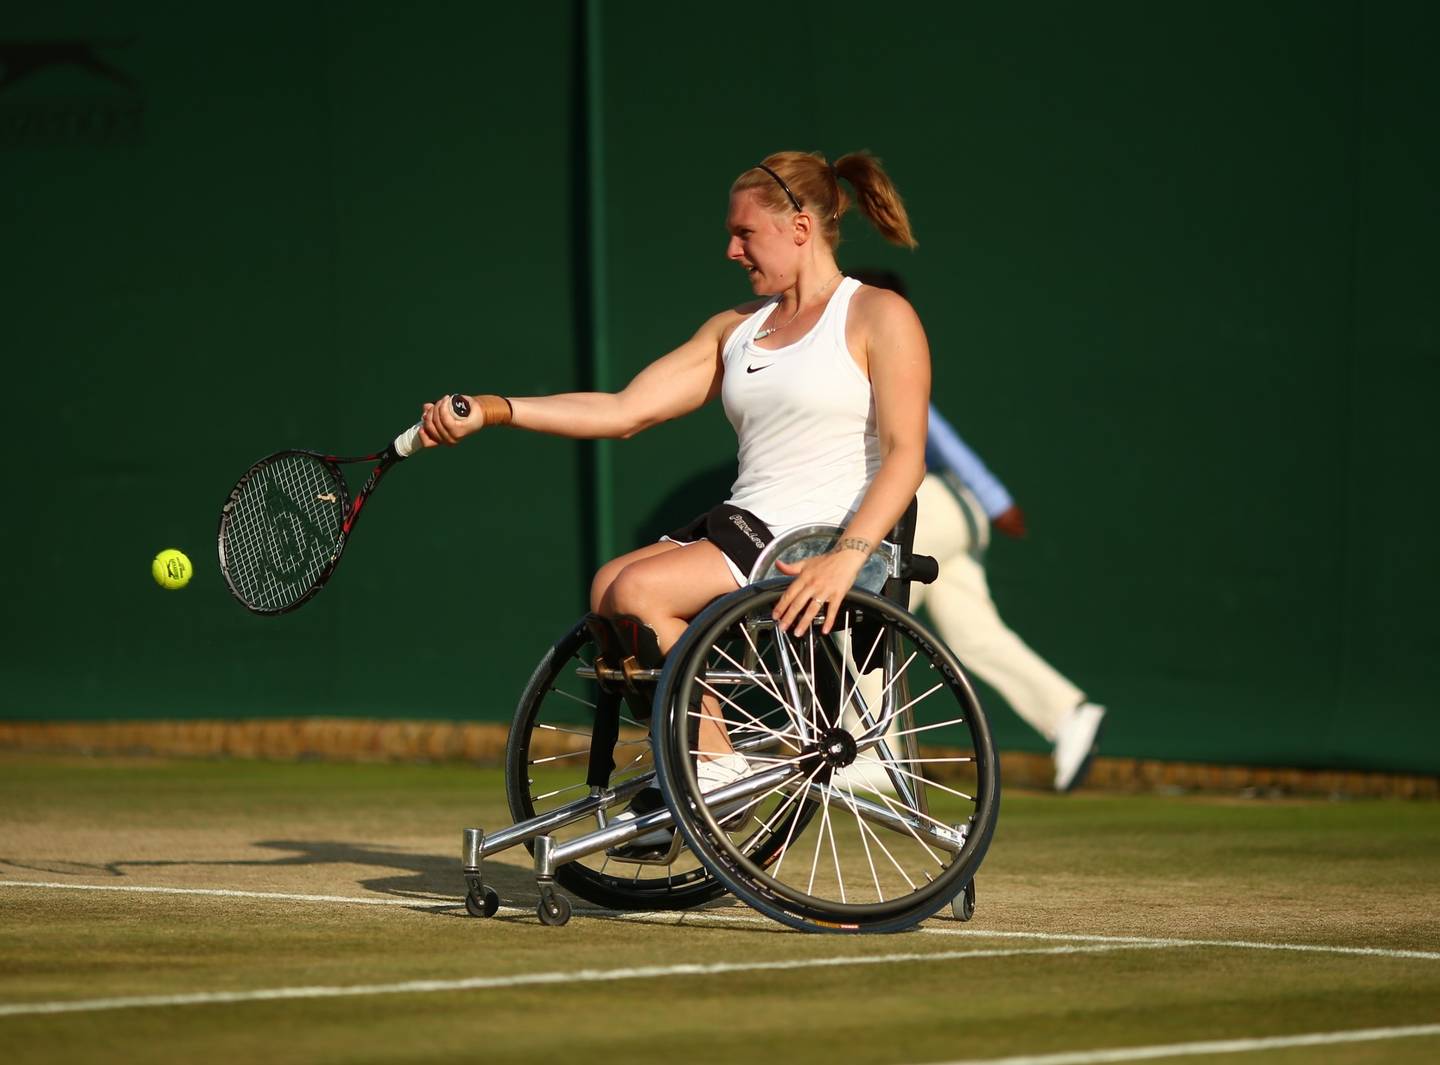 Jordanne Whiley, wheelchair tennis player hitting forehand on grass court